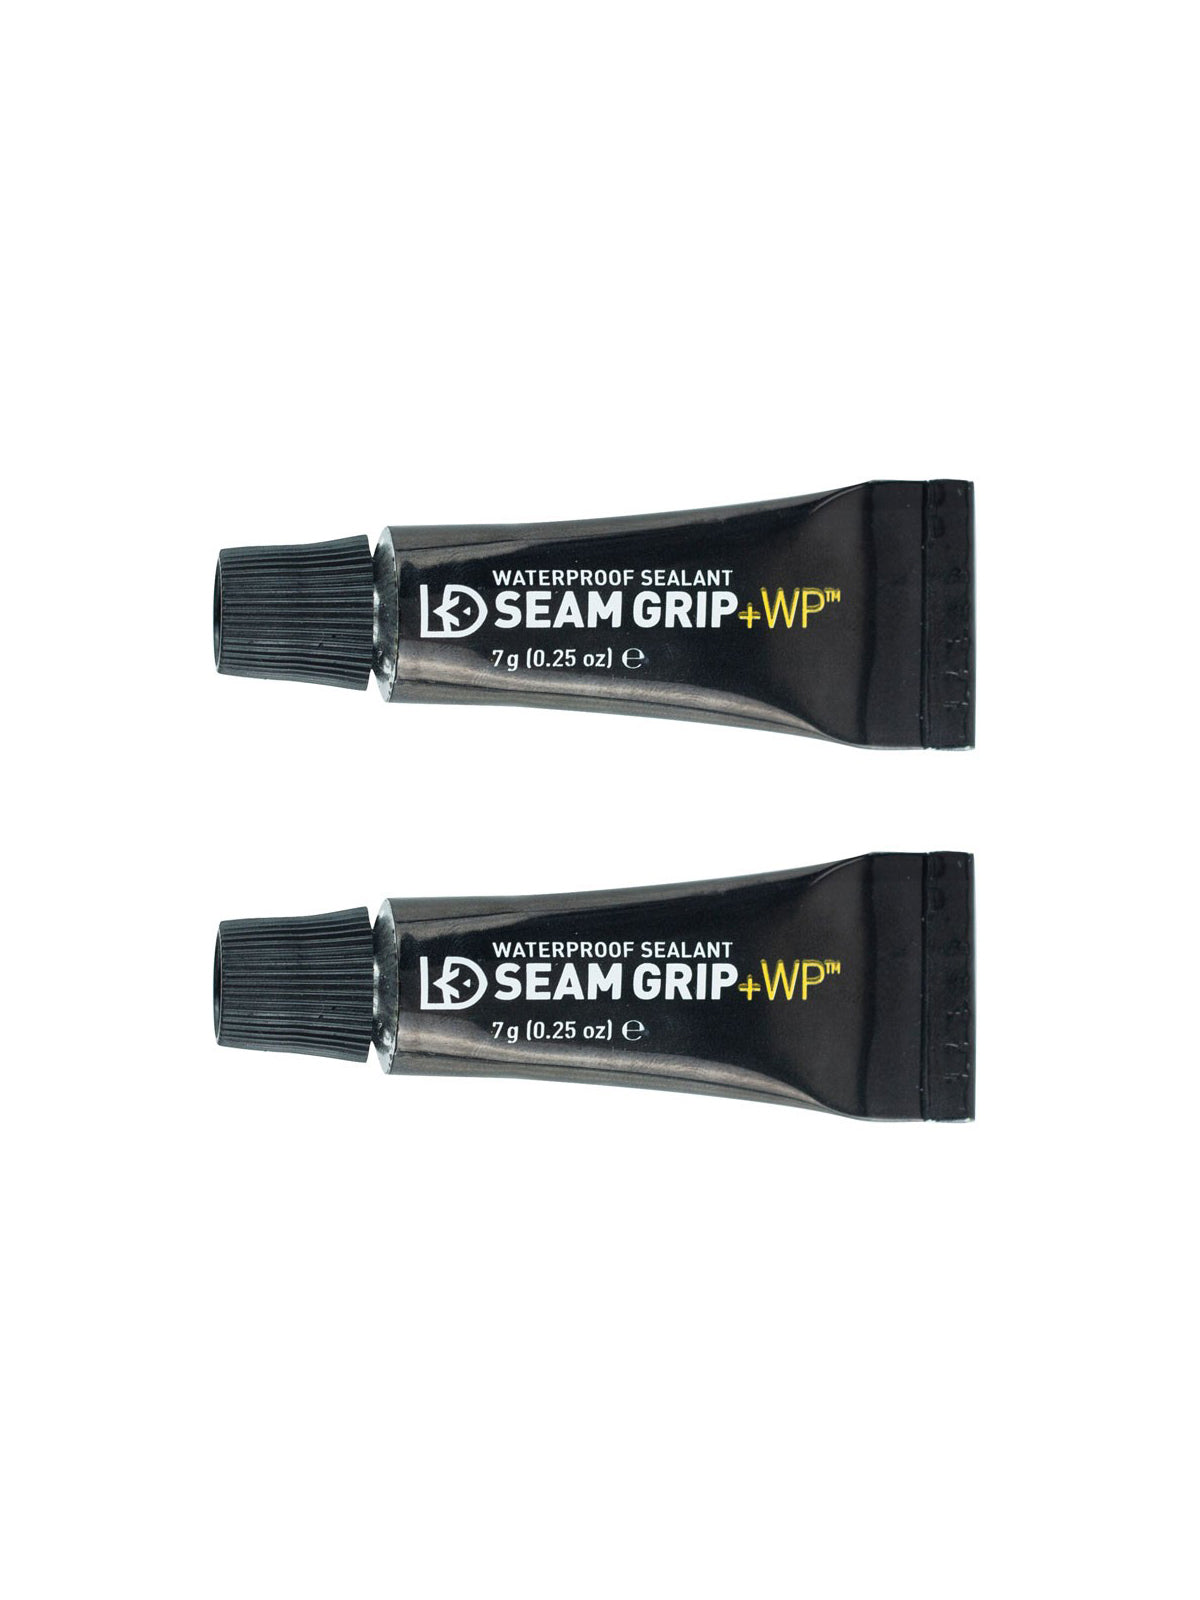 Two tubes ofGear Aid Seam Grip + WP Waterproof Sealant